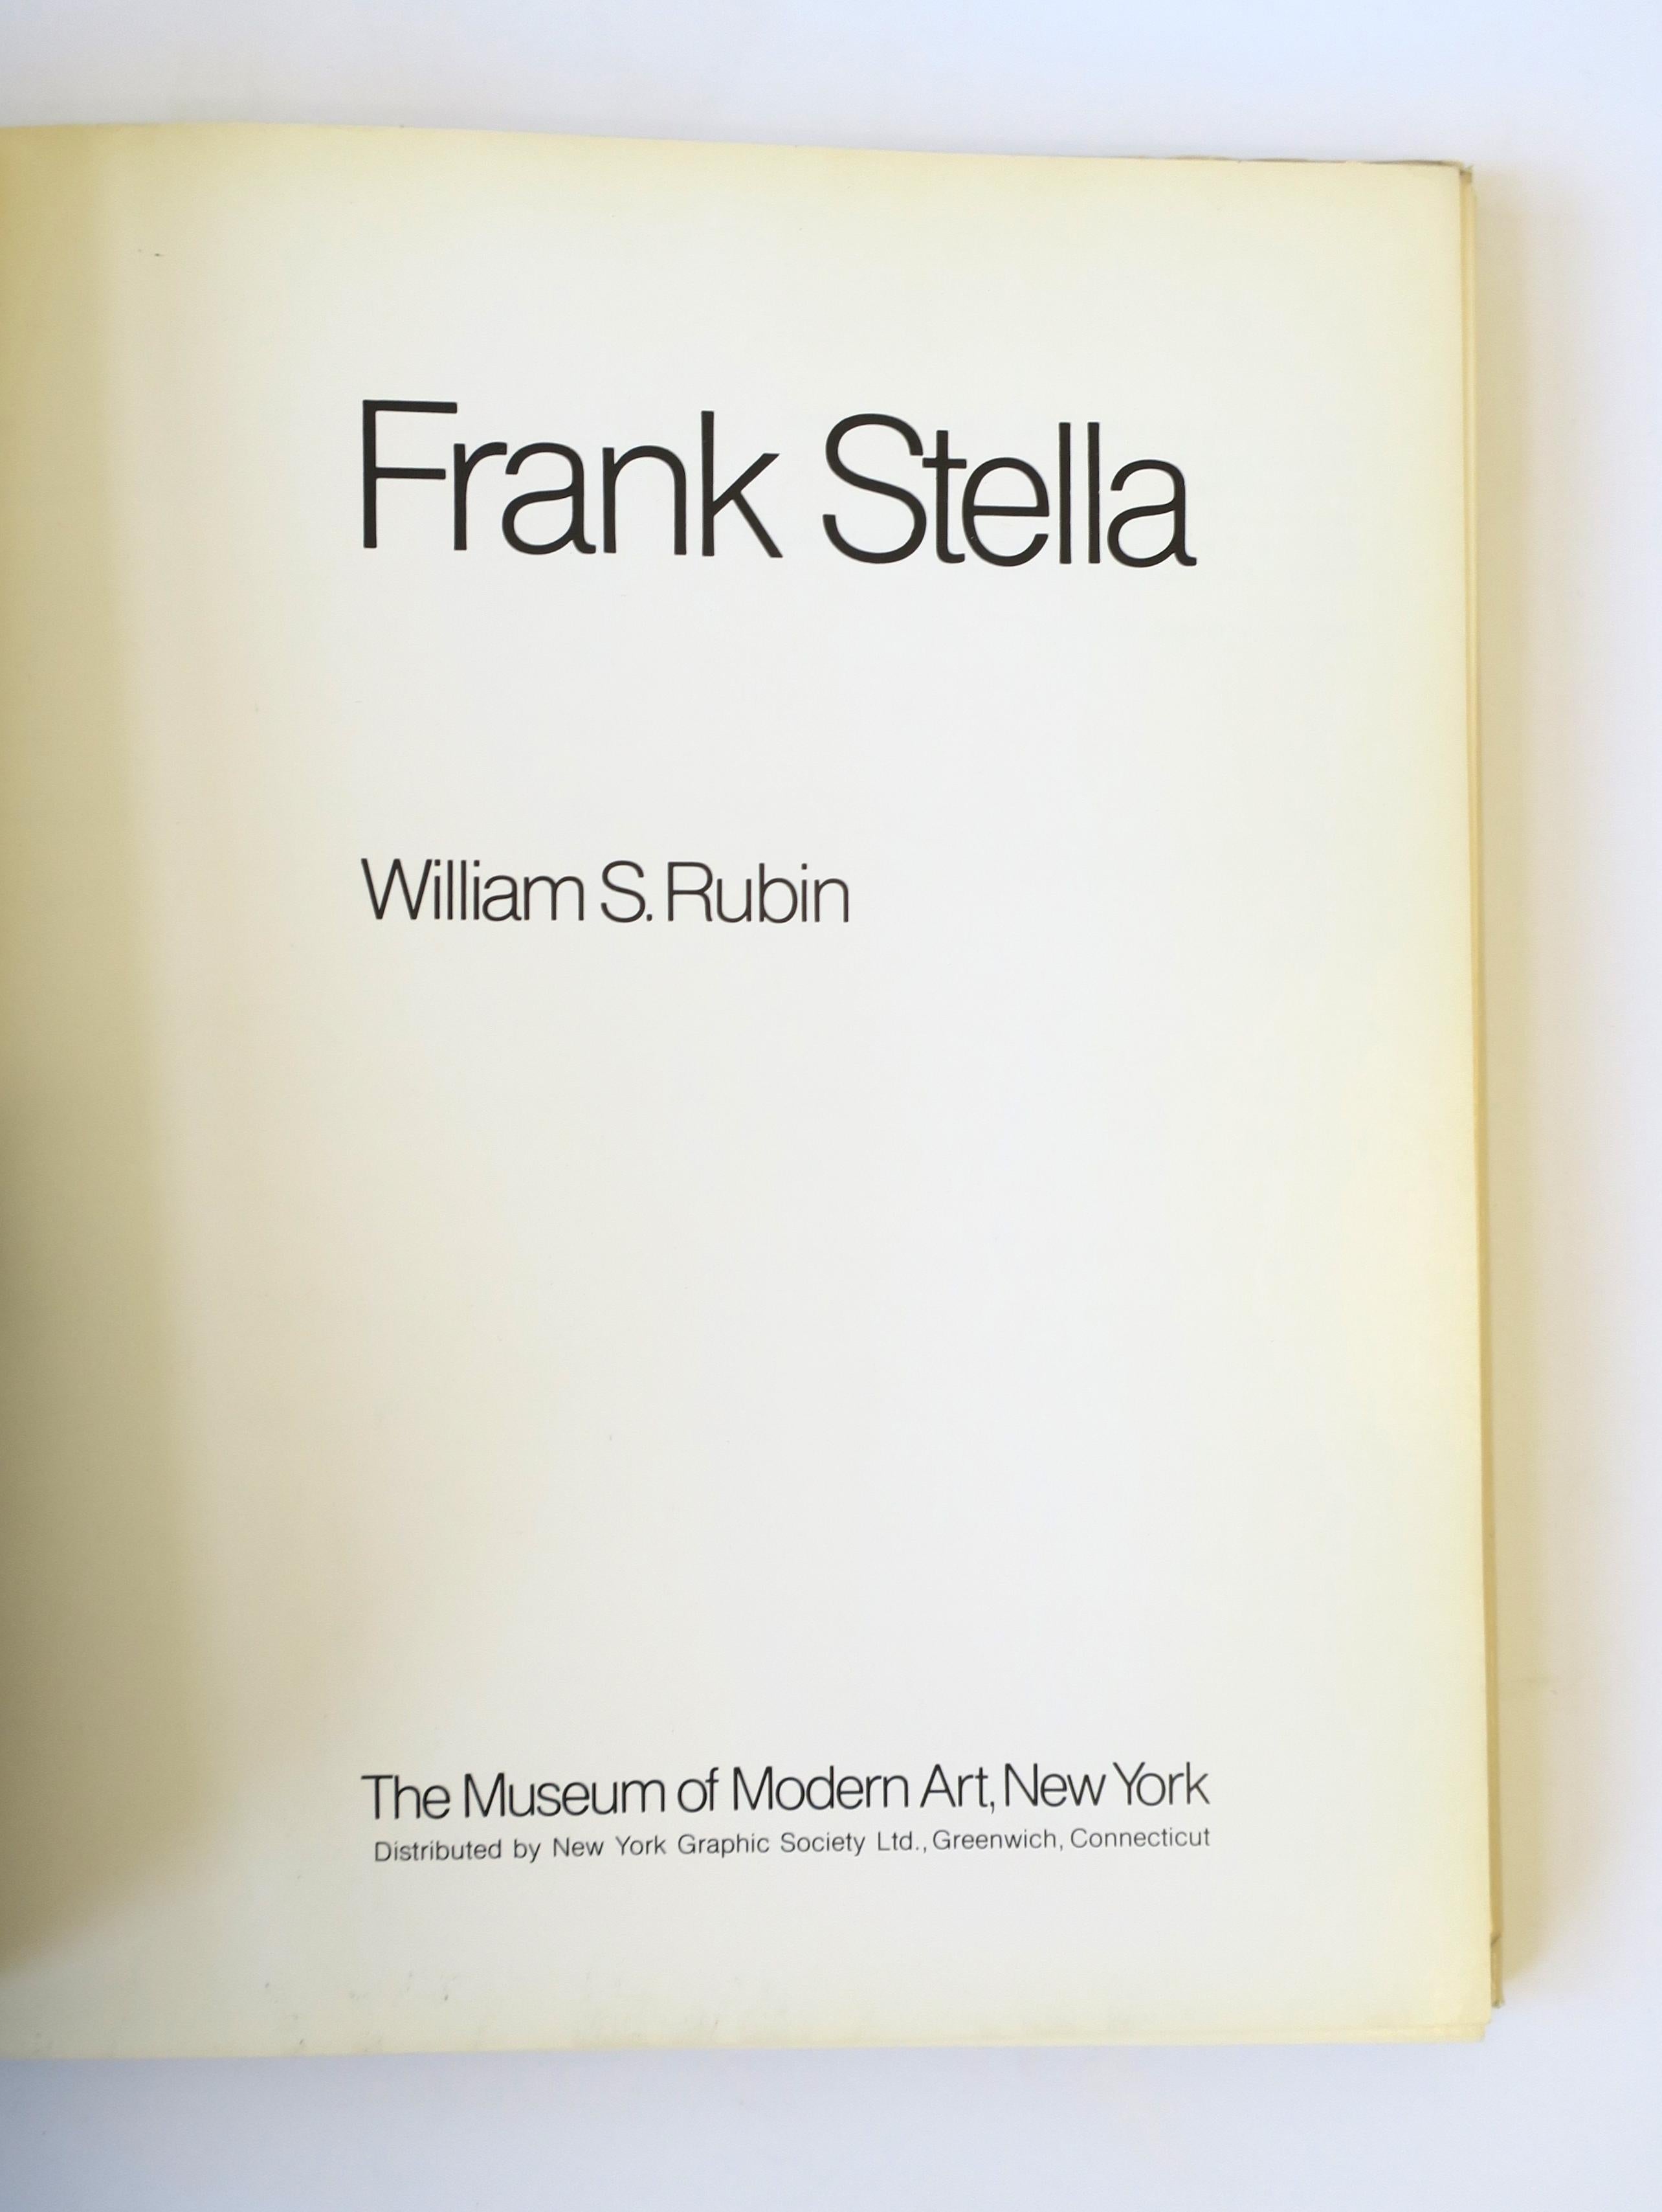 Fin du 20e siècle Frank Stella Artiste abstrait Metropolitan Museum of Art Livre, 1970, New York en vente